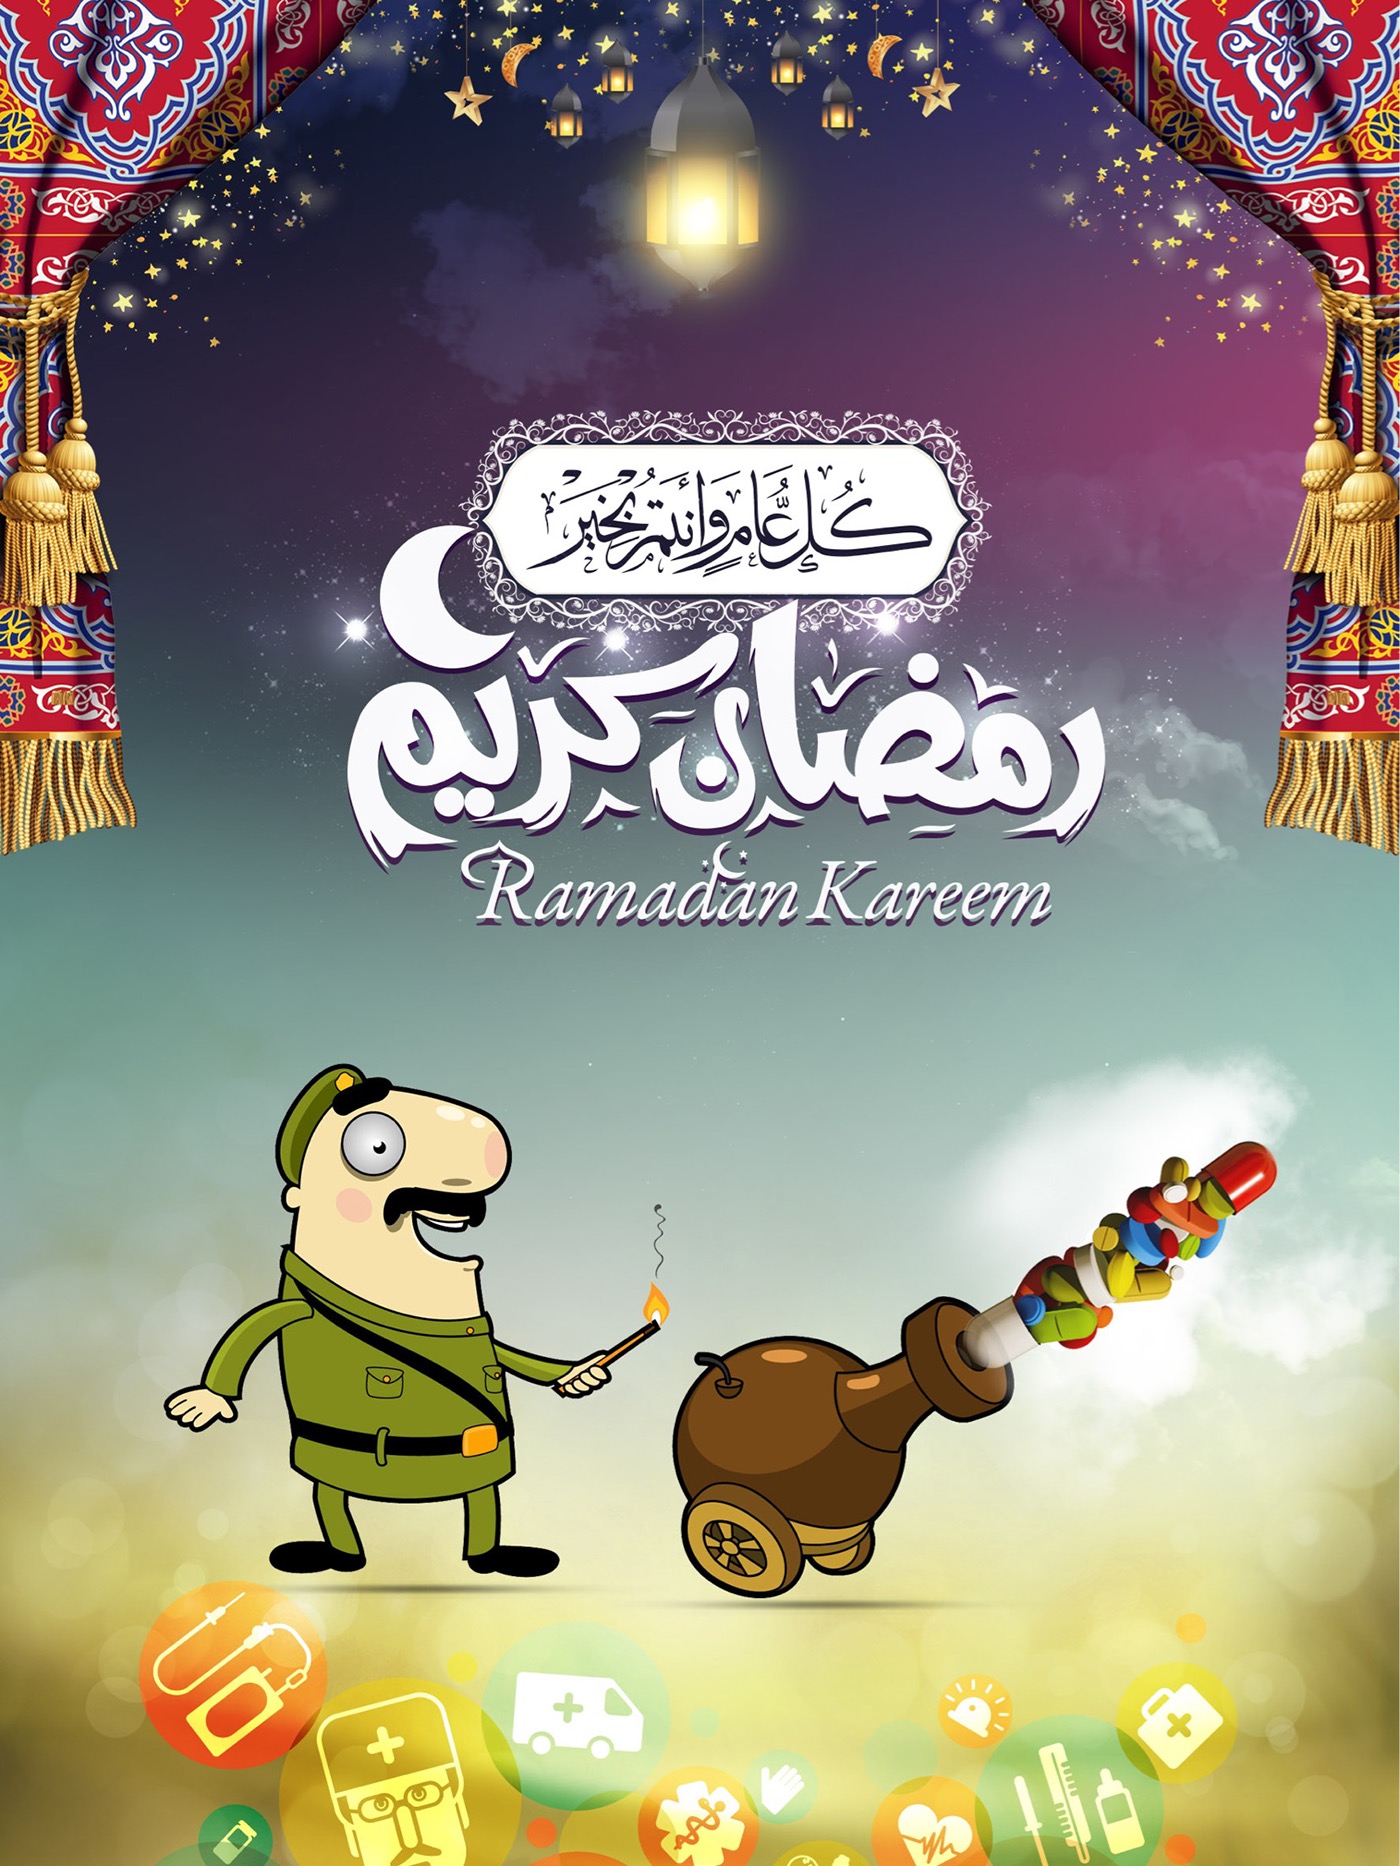 Ramadan kareem graphic design creative poster cover